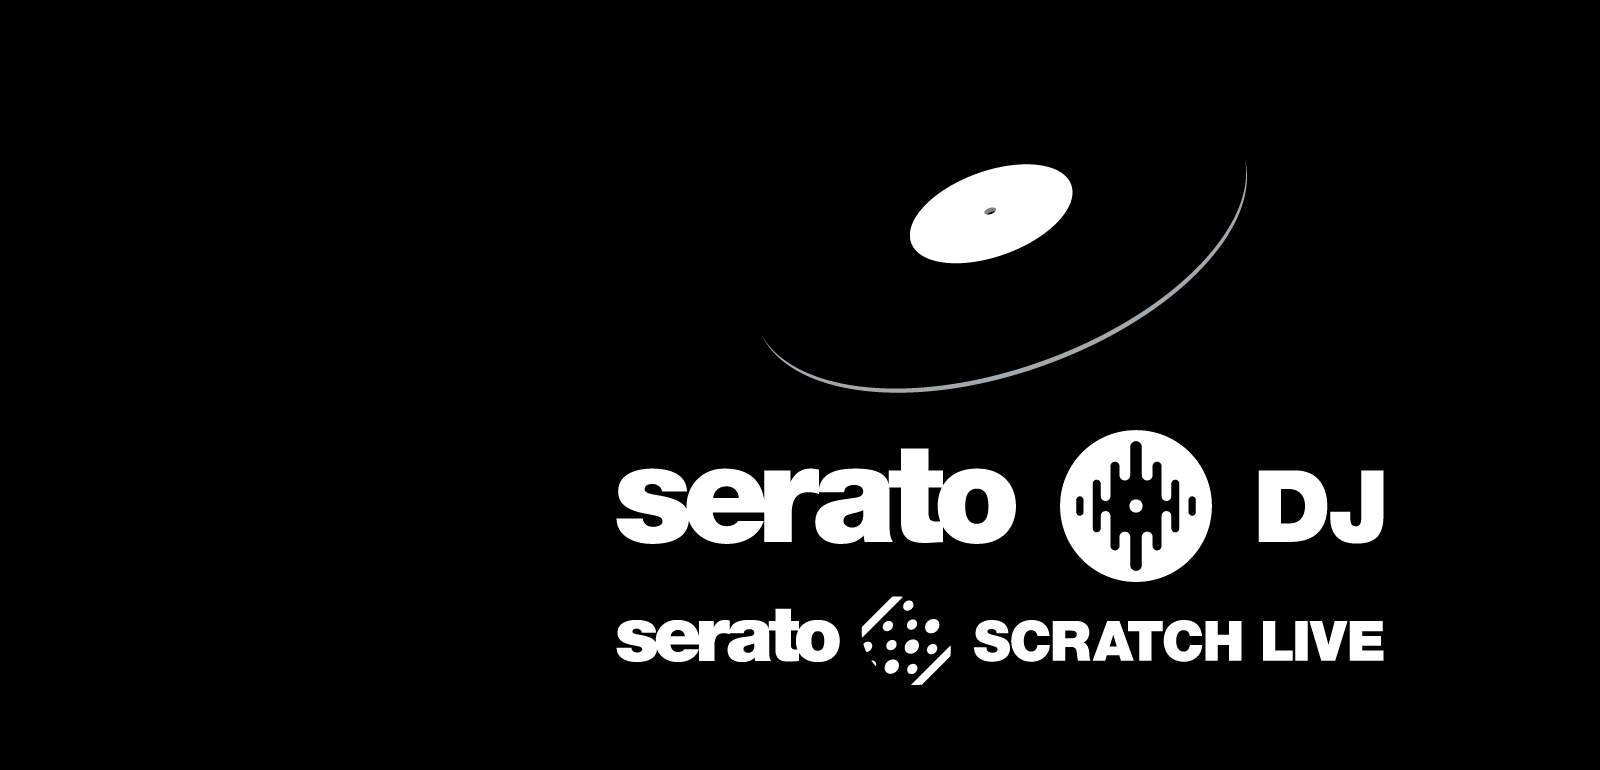 serato dj video download free